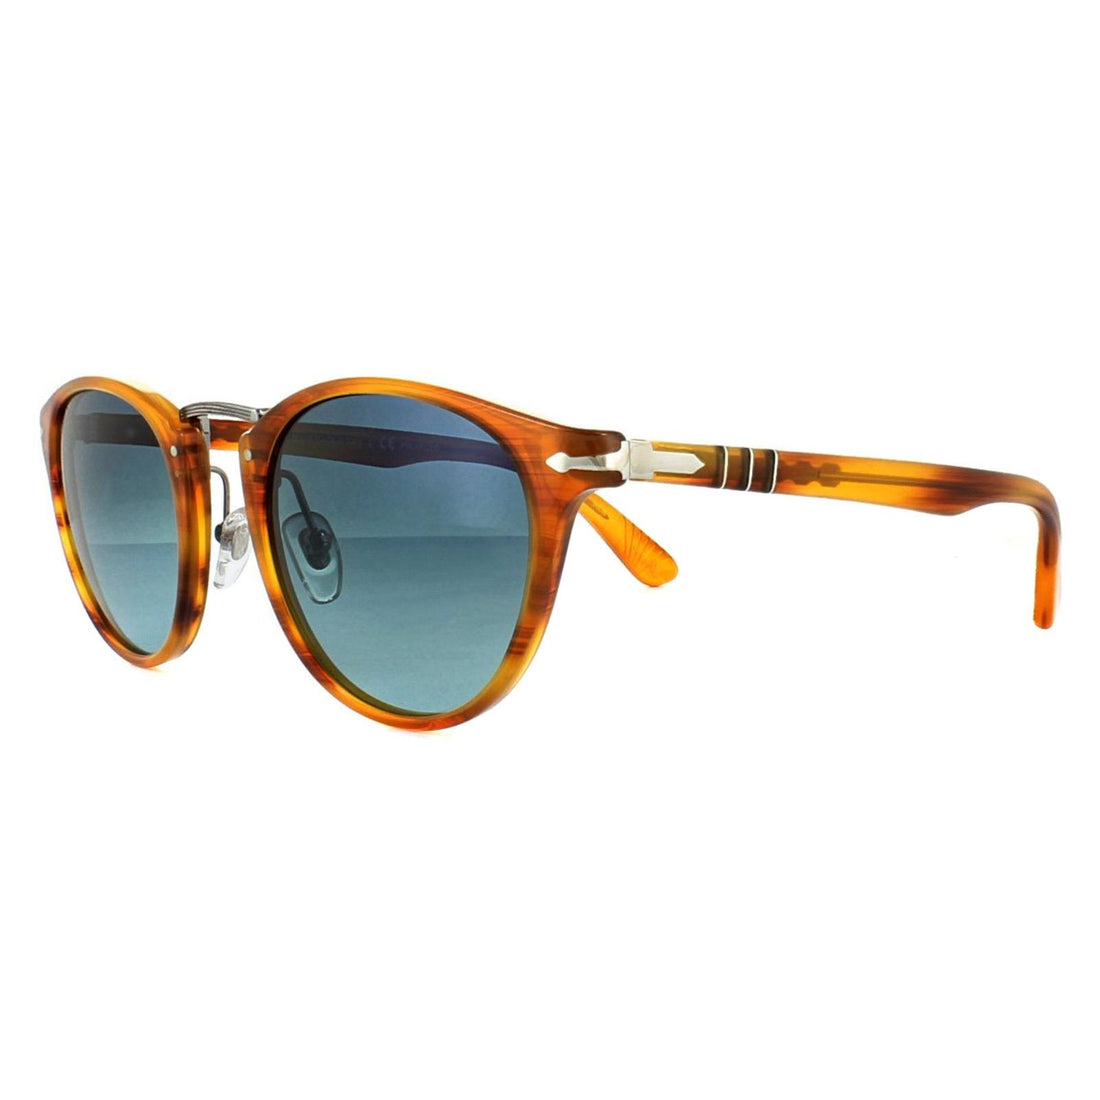 Persol Sunglasses 3108 960/S3 Striped Brown Blue Polarized 49mm